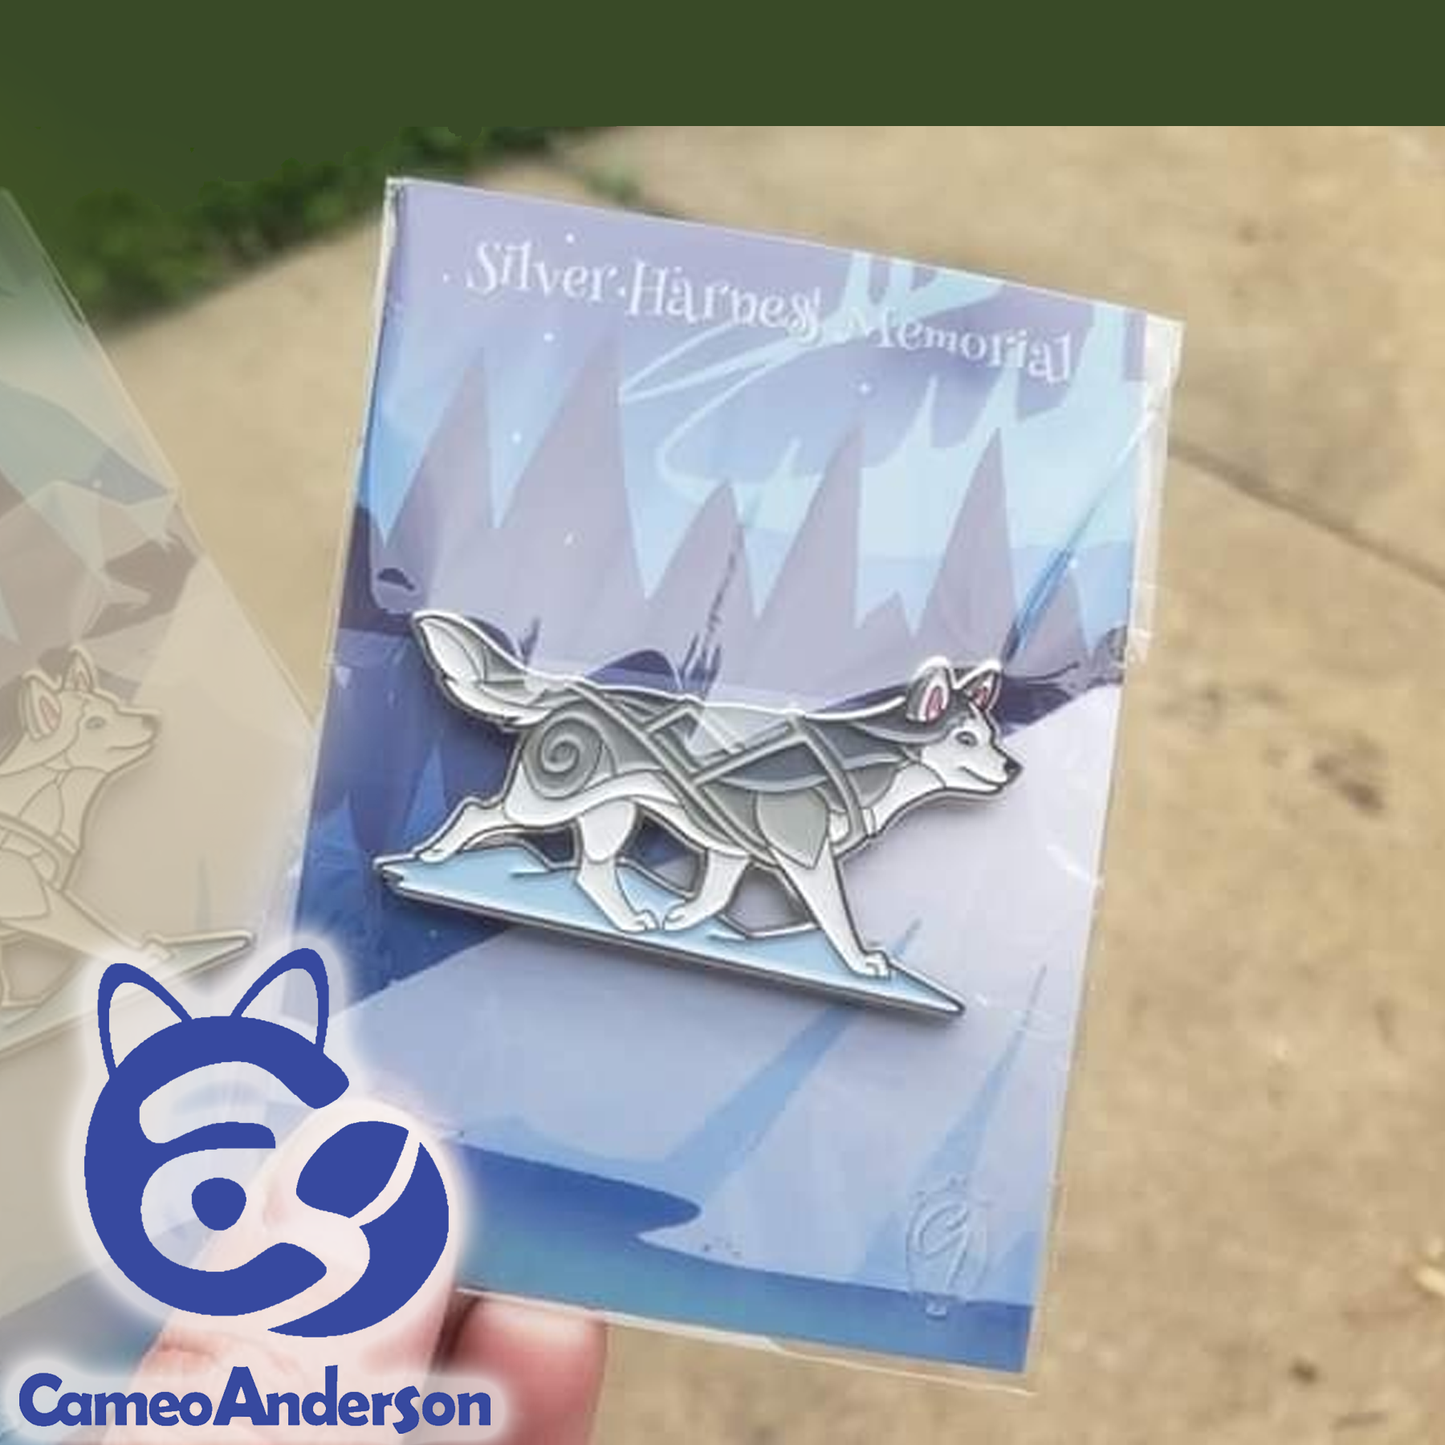 Silver Harness Siberian Husky Memorial Pins || Cameo Anderson